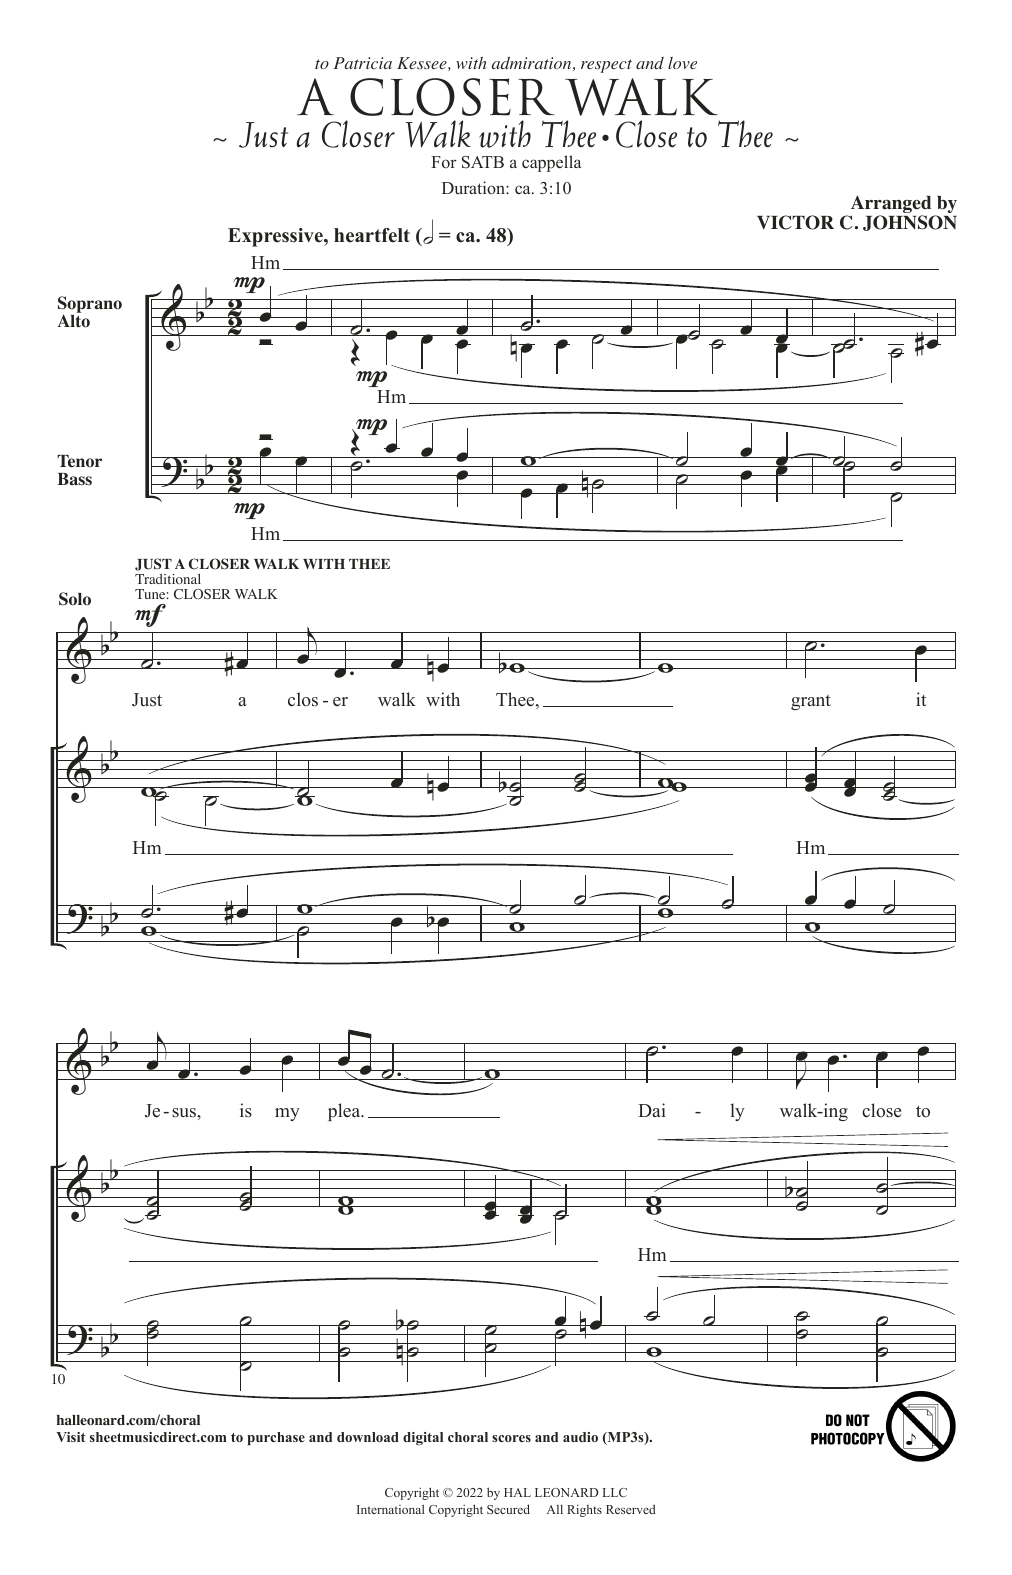 Victor C. Johnson A Closer Walk Sheet Music Notes & Chords for SATB Choir - Download or Print PDF